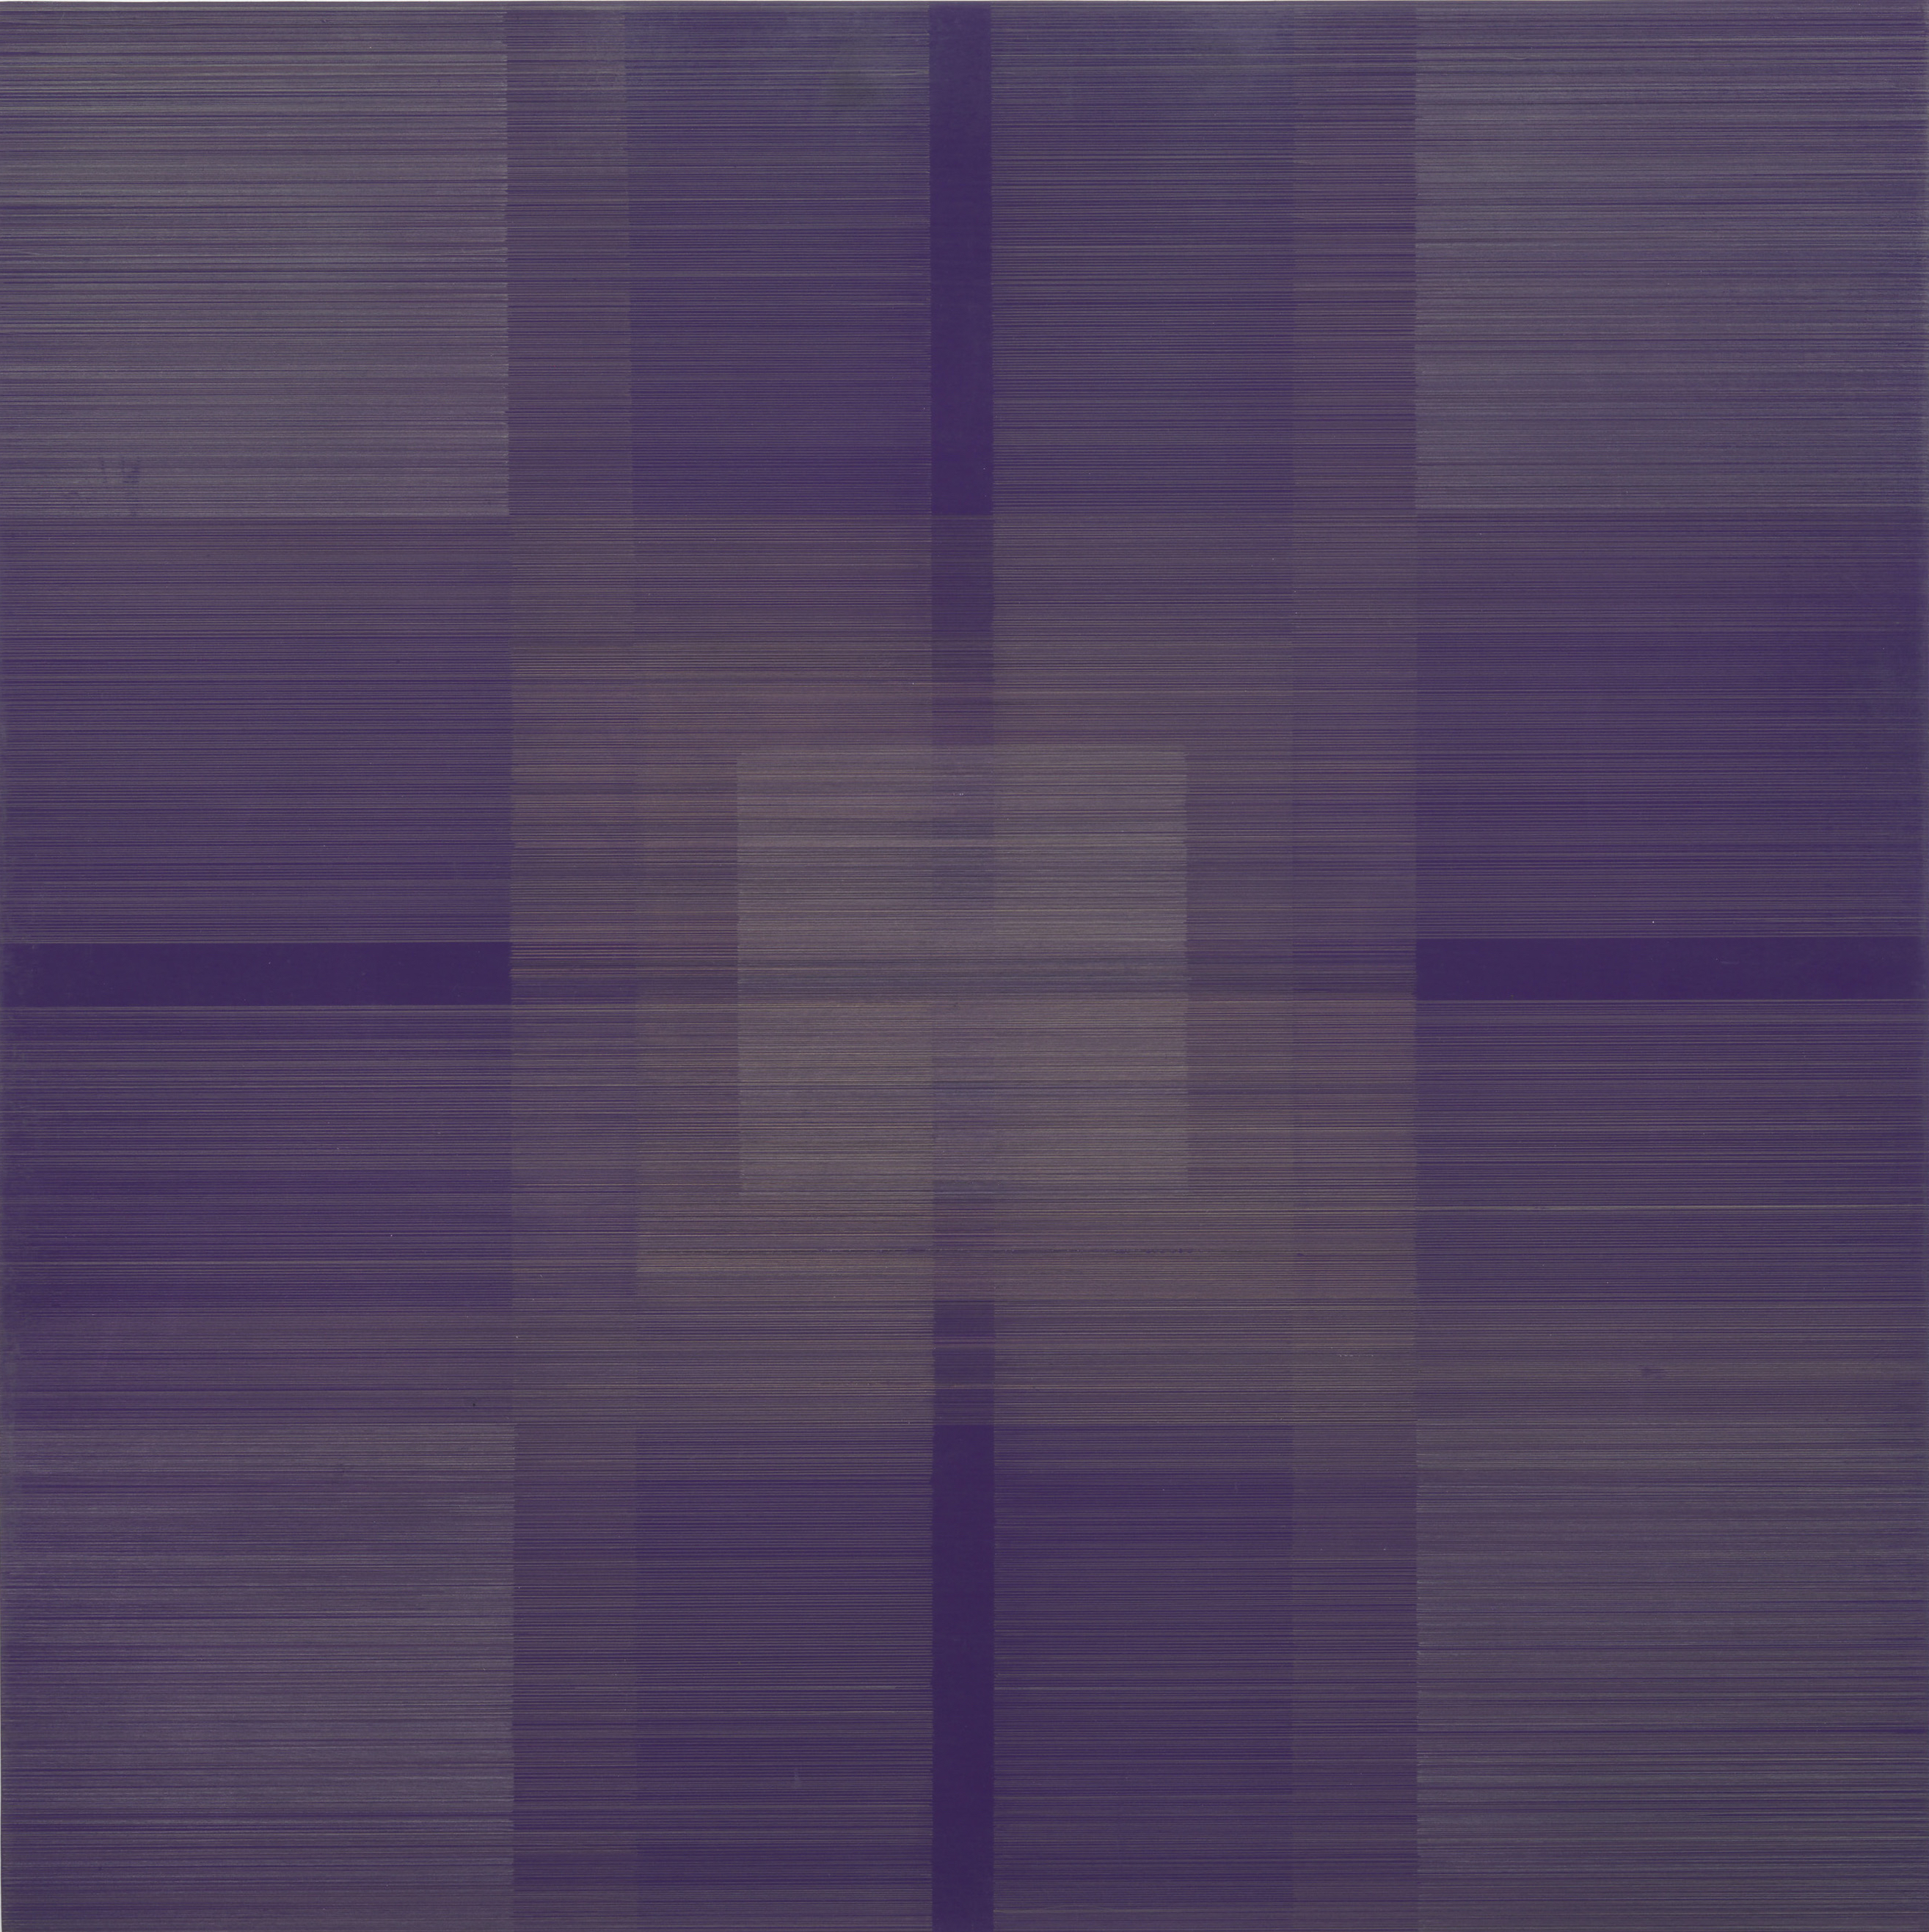 Susan Schwalb, Polyphony XV, silver/gold/copper/aluminiumpoint, purple gesso, museum mt board on wood, 61 x 61 x 5 cm, 2016